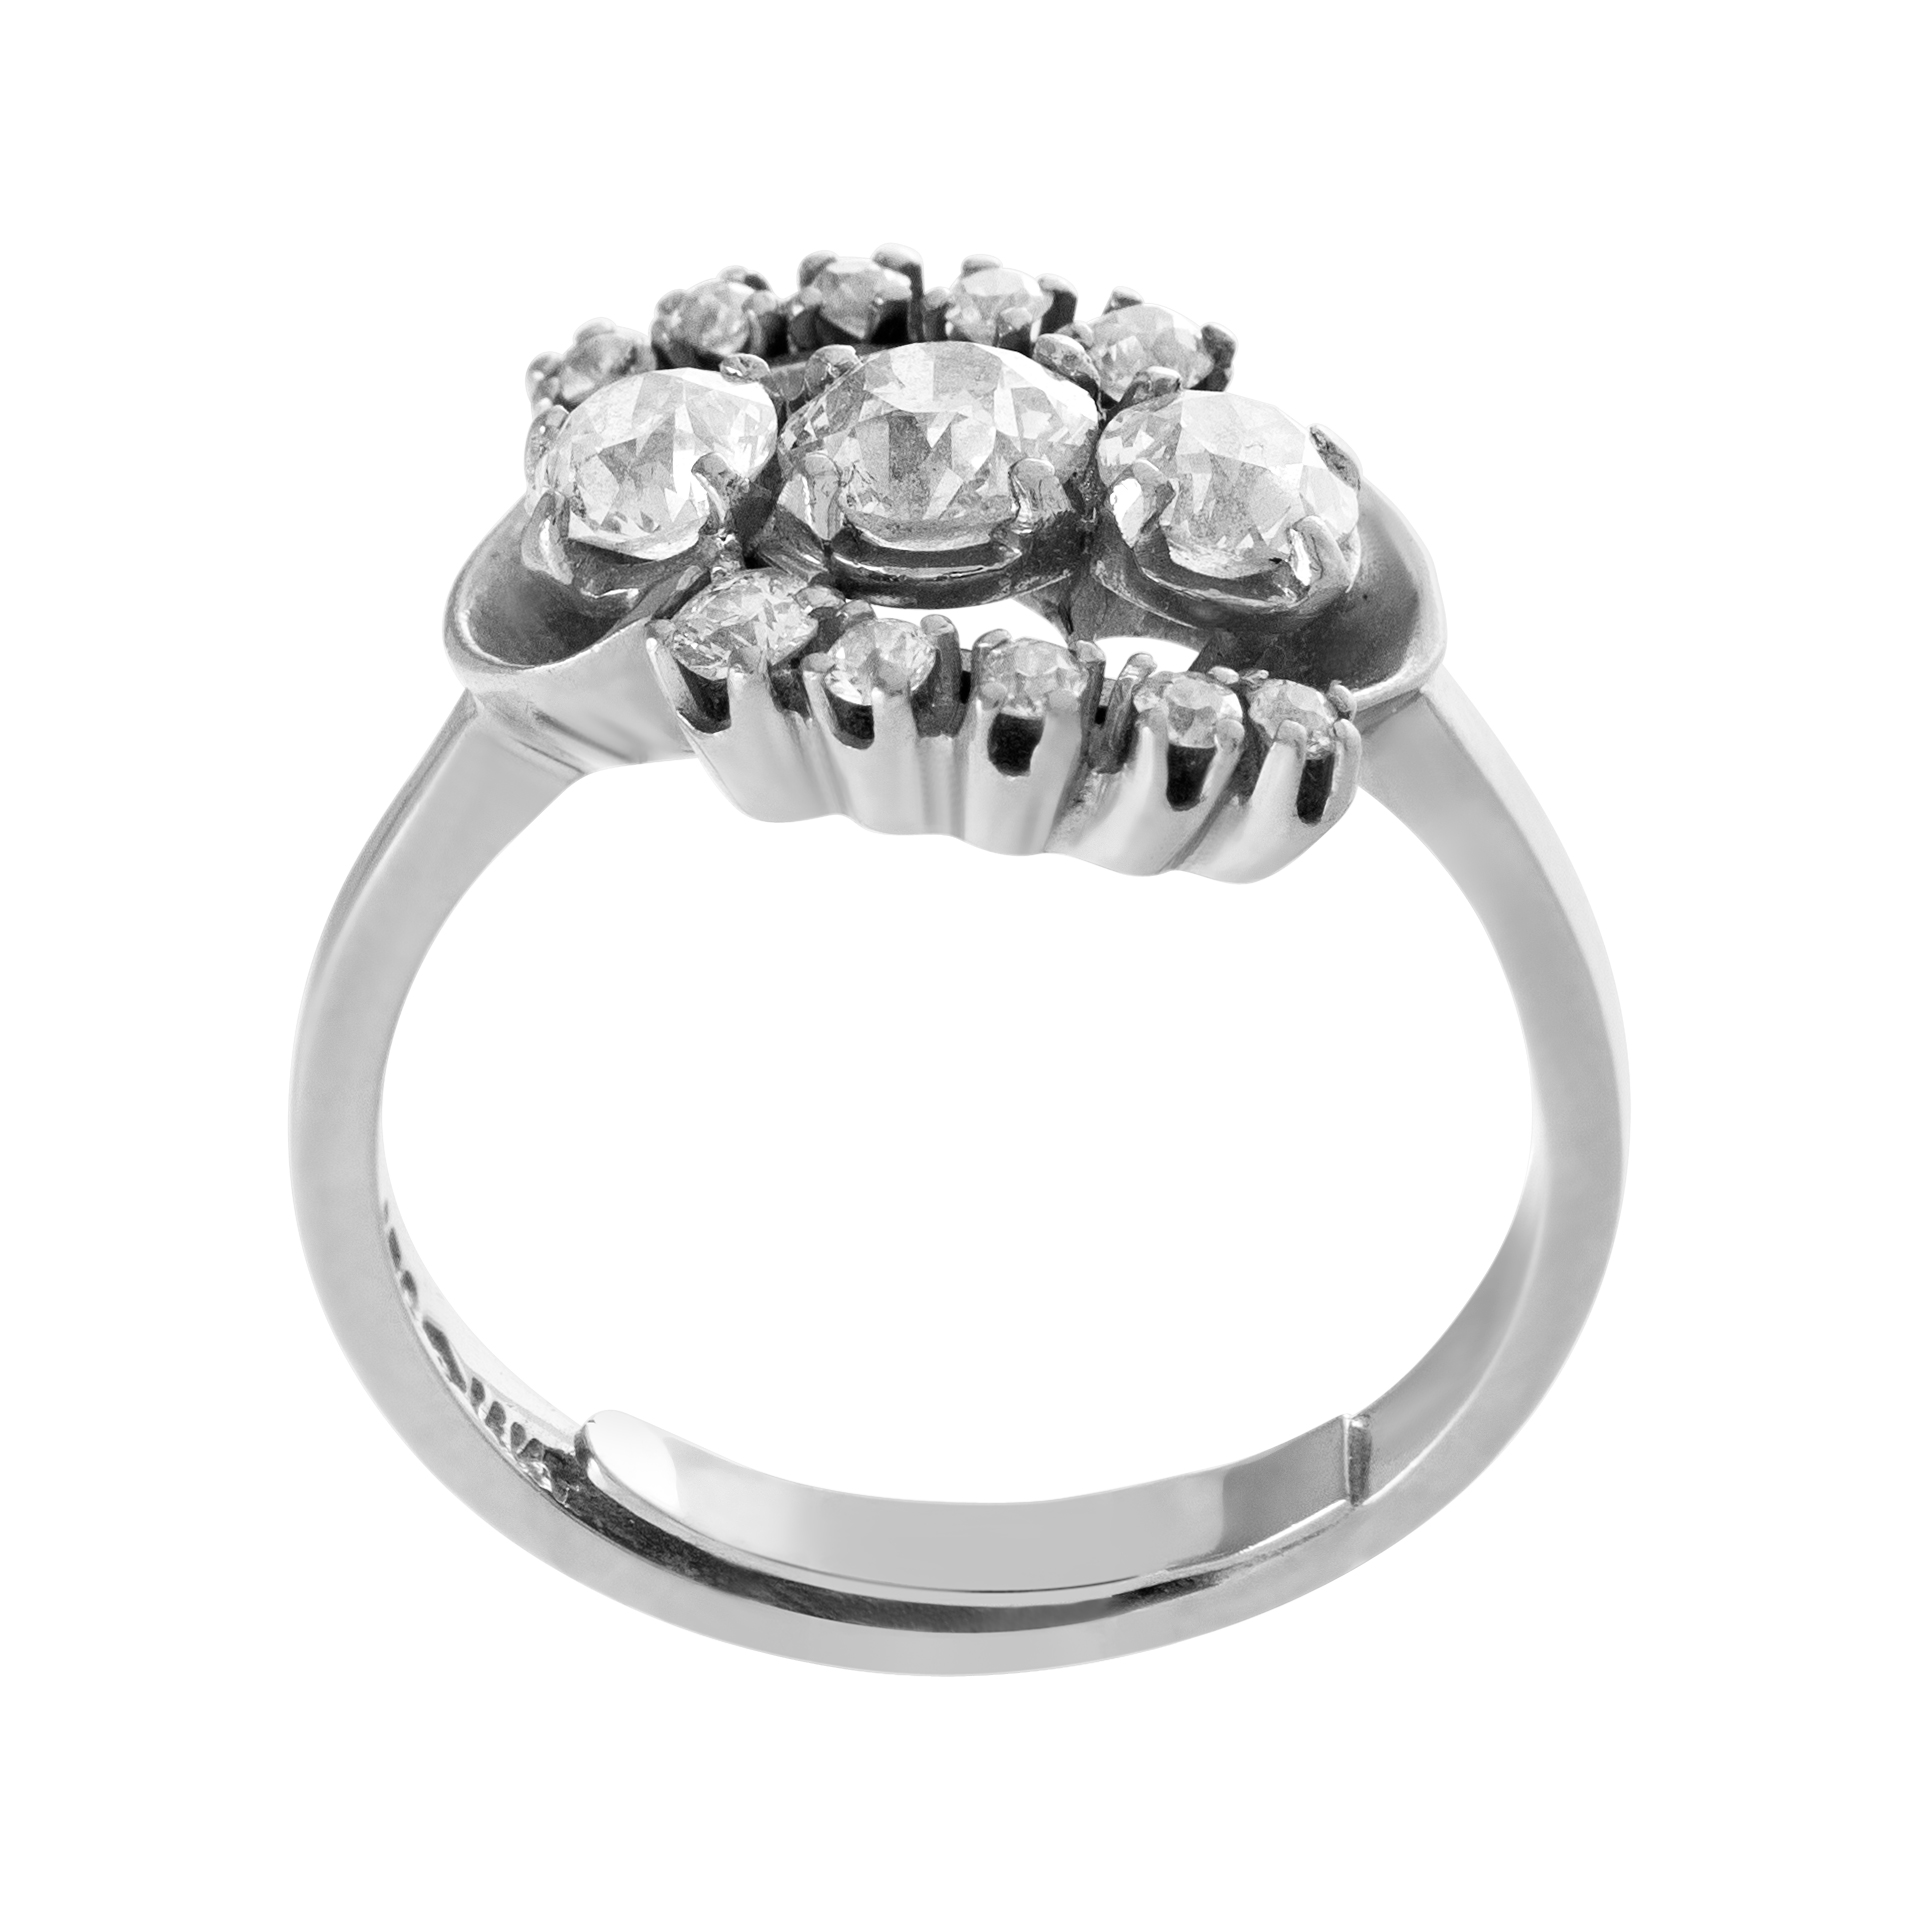 "Past, Present, Future" 3 European cut diamond ring set in 14K white gold image 1